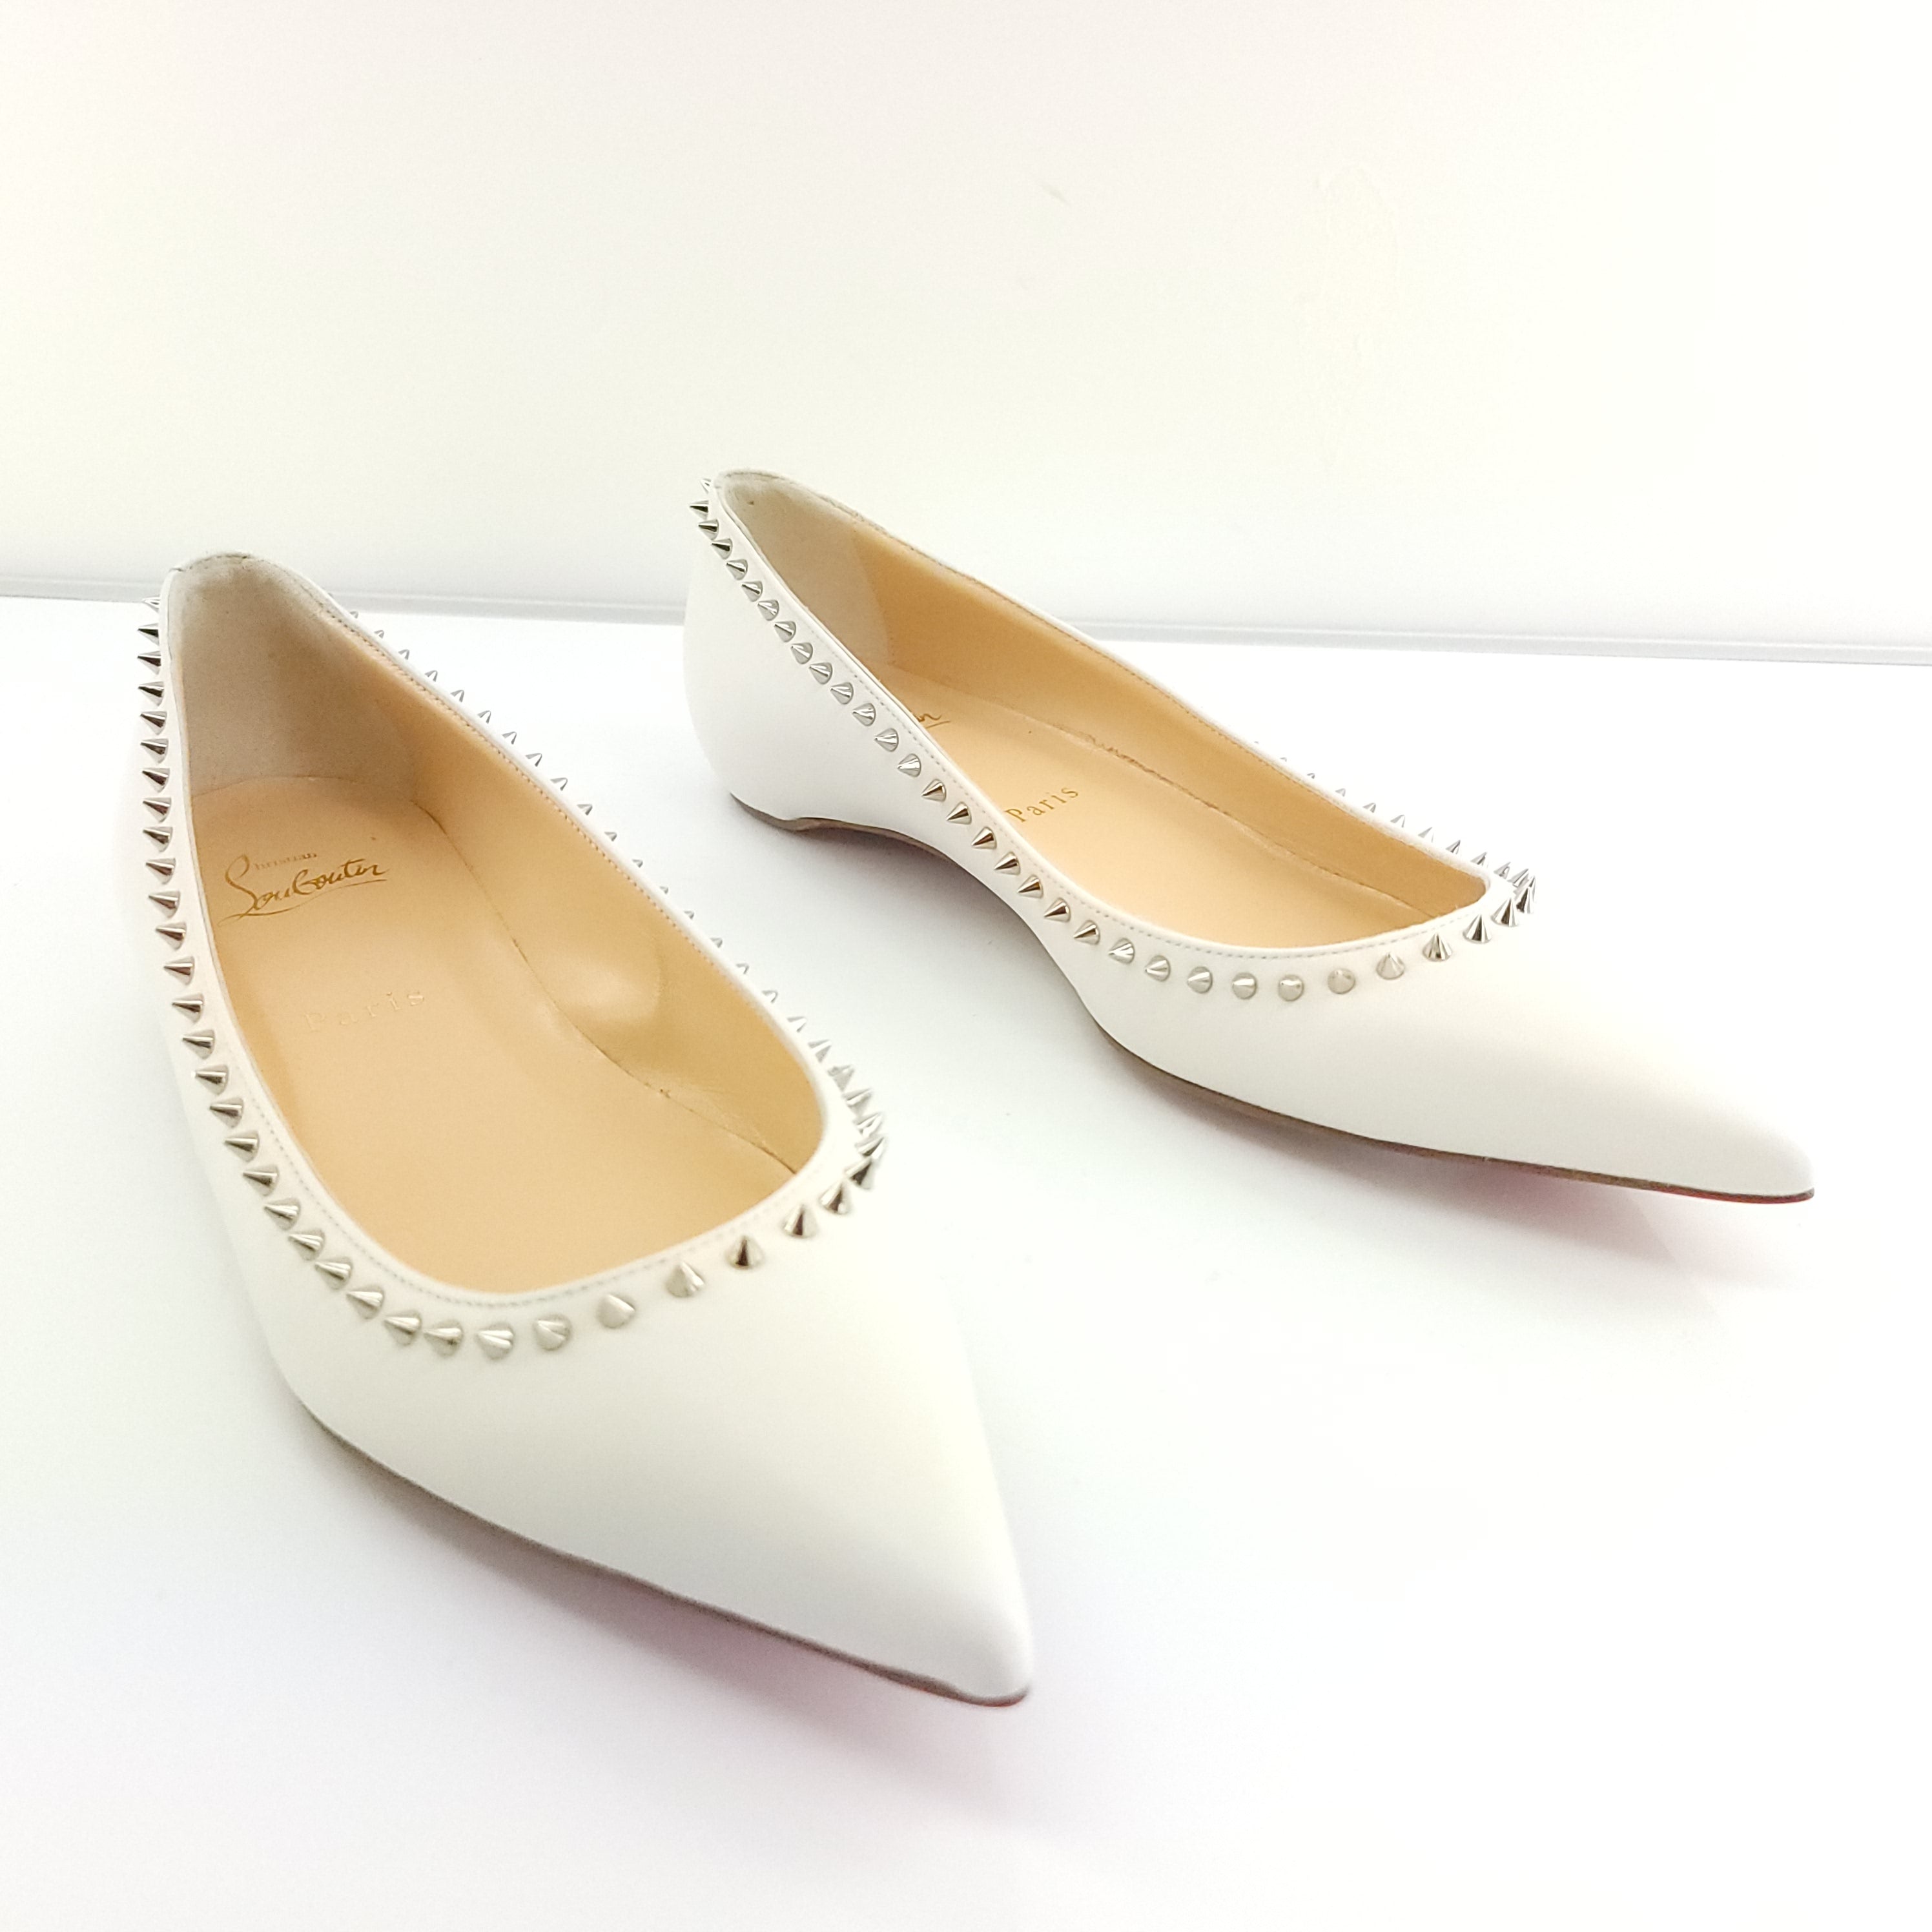 Christian Louboutin White Leather Anjalina Pointed Toe Flats Size 38 NIB $845